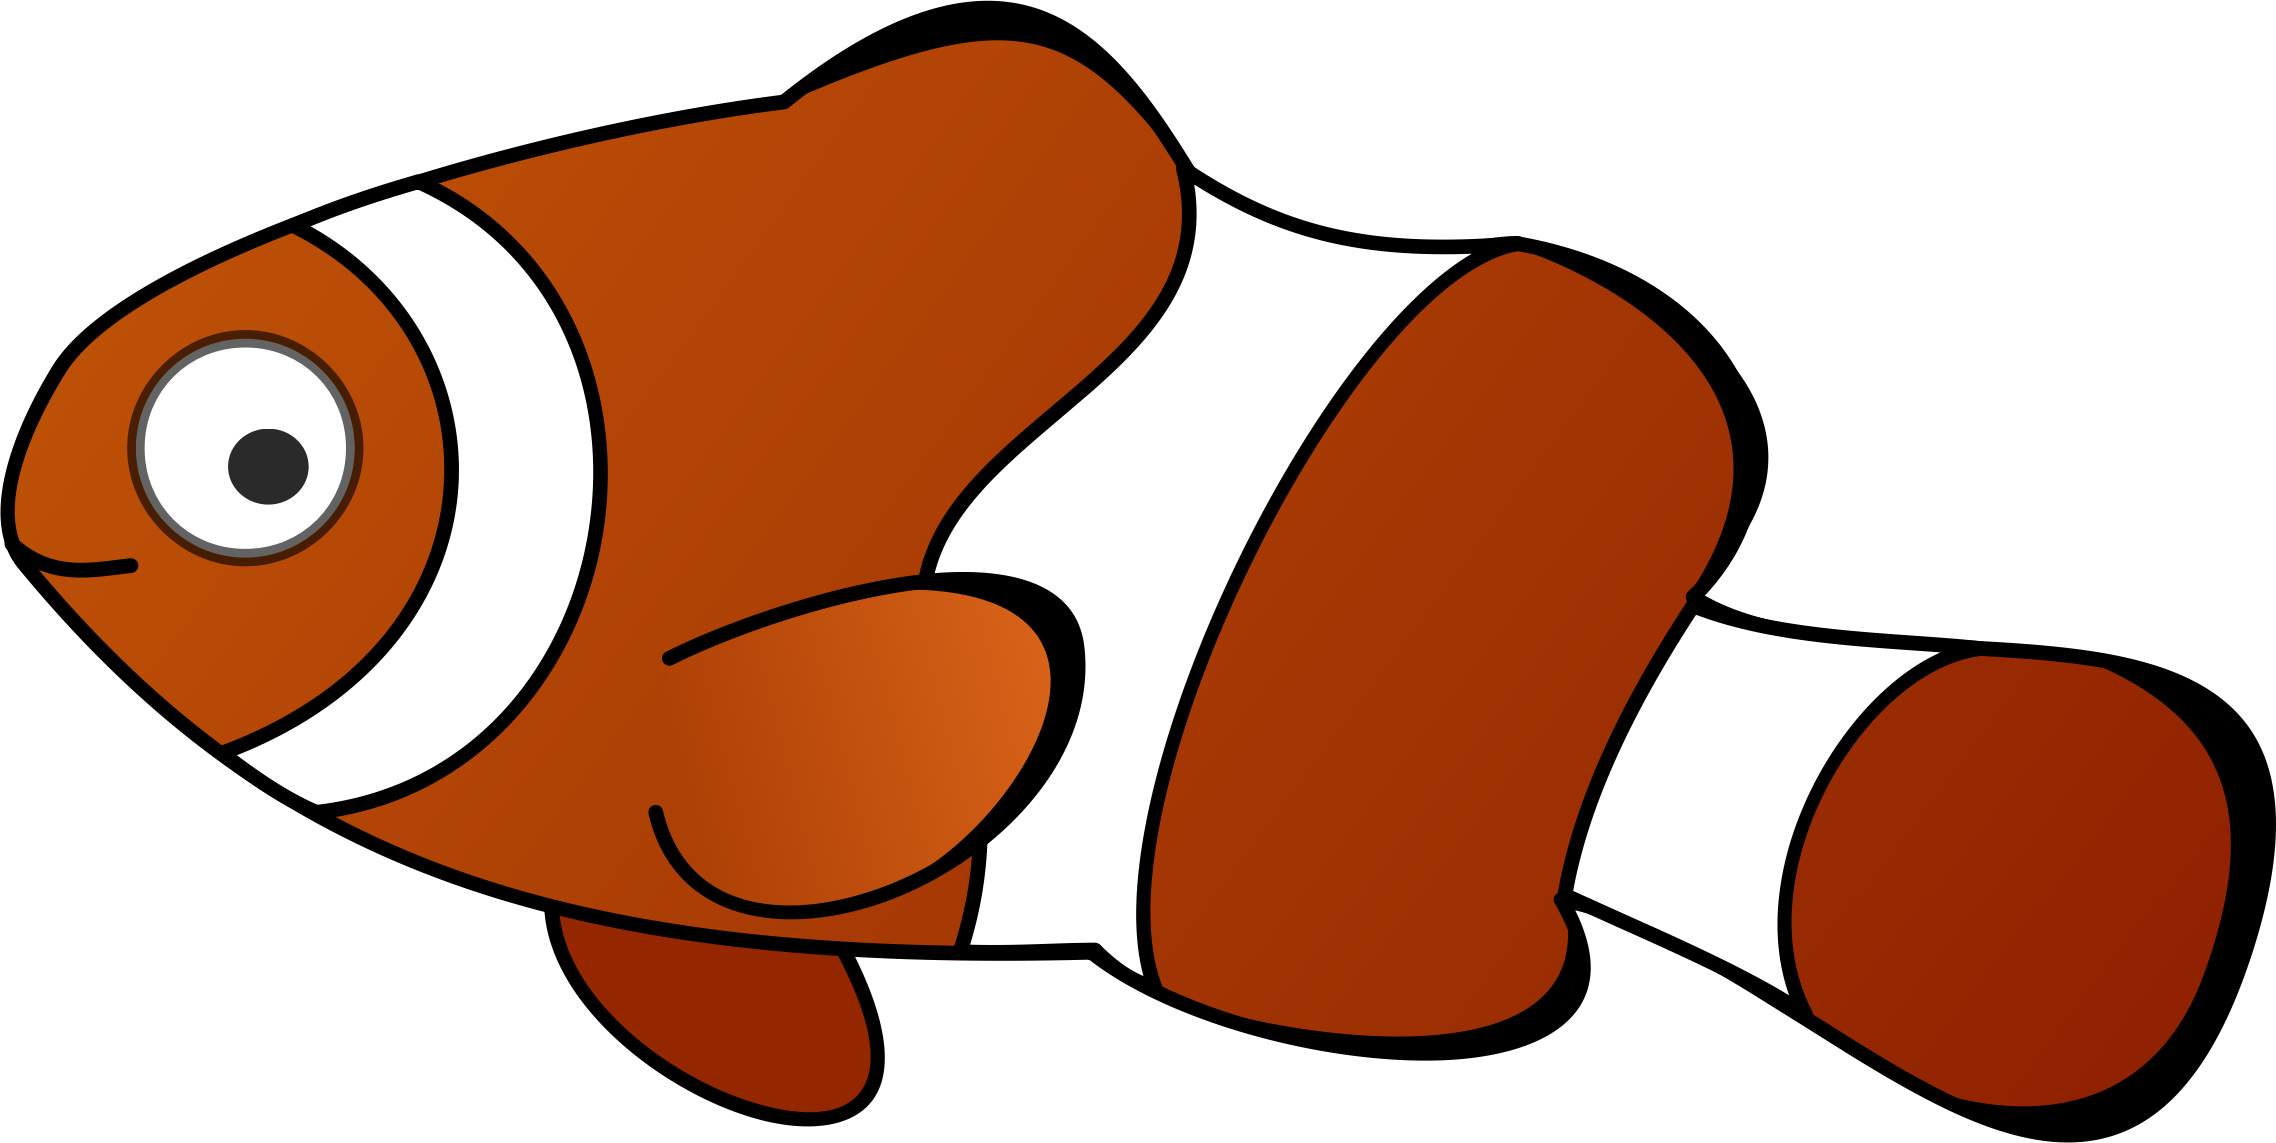 Download Clownfish Cartoon vector clipart image - Free stock photo ...